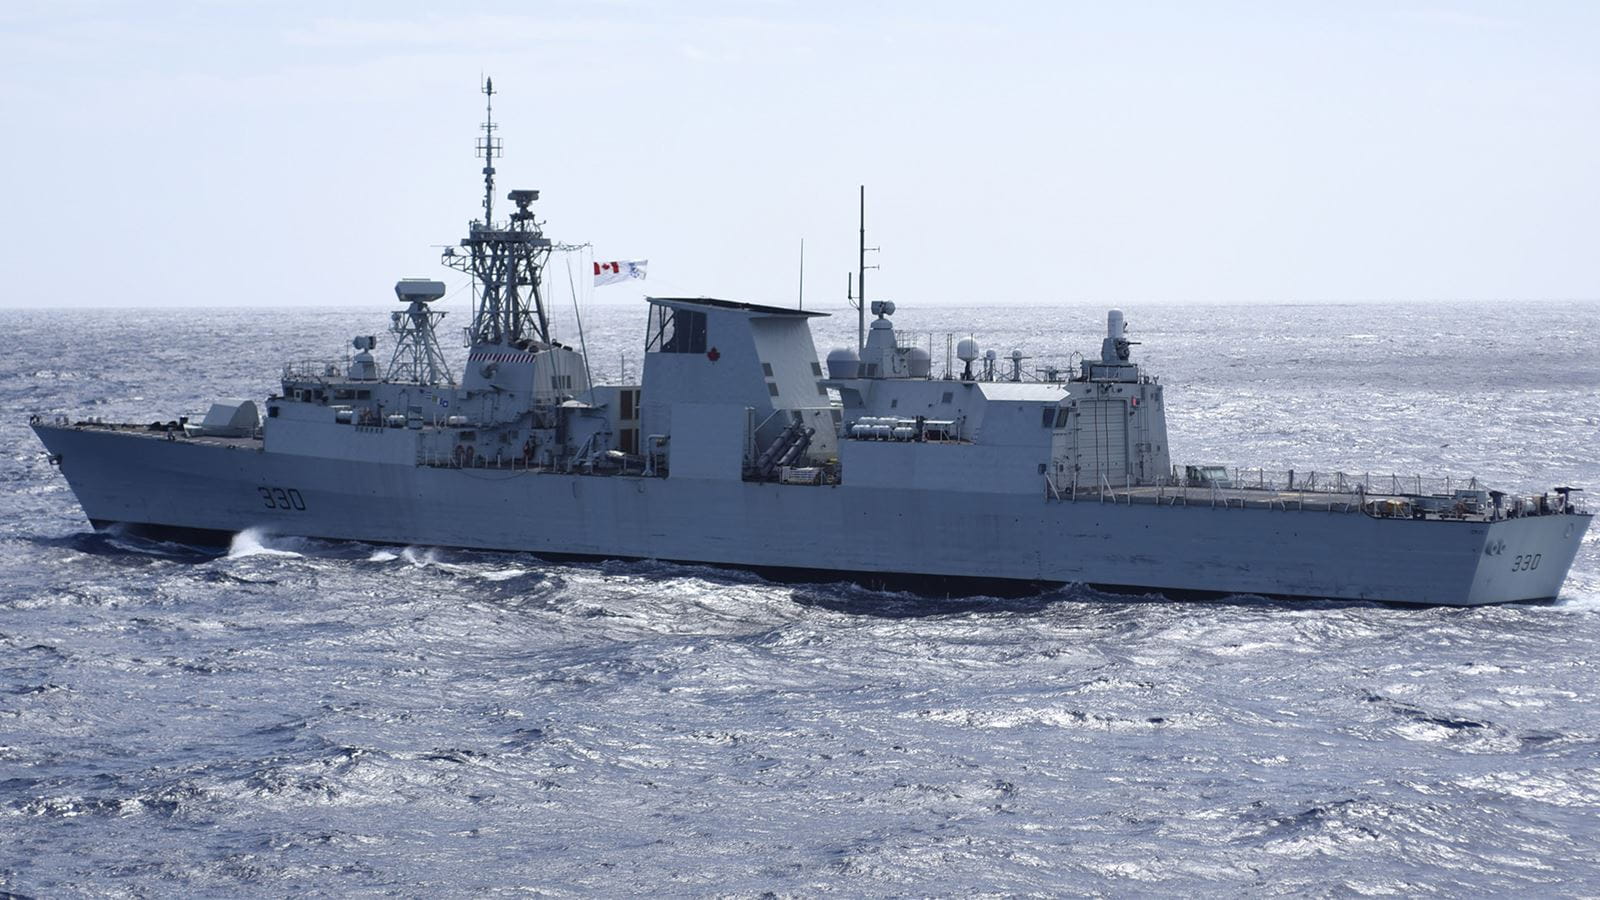 Royal Canadian Navy ship in ocean